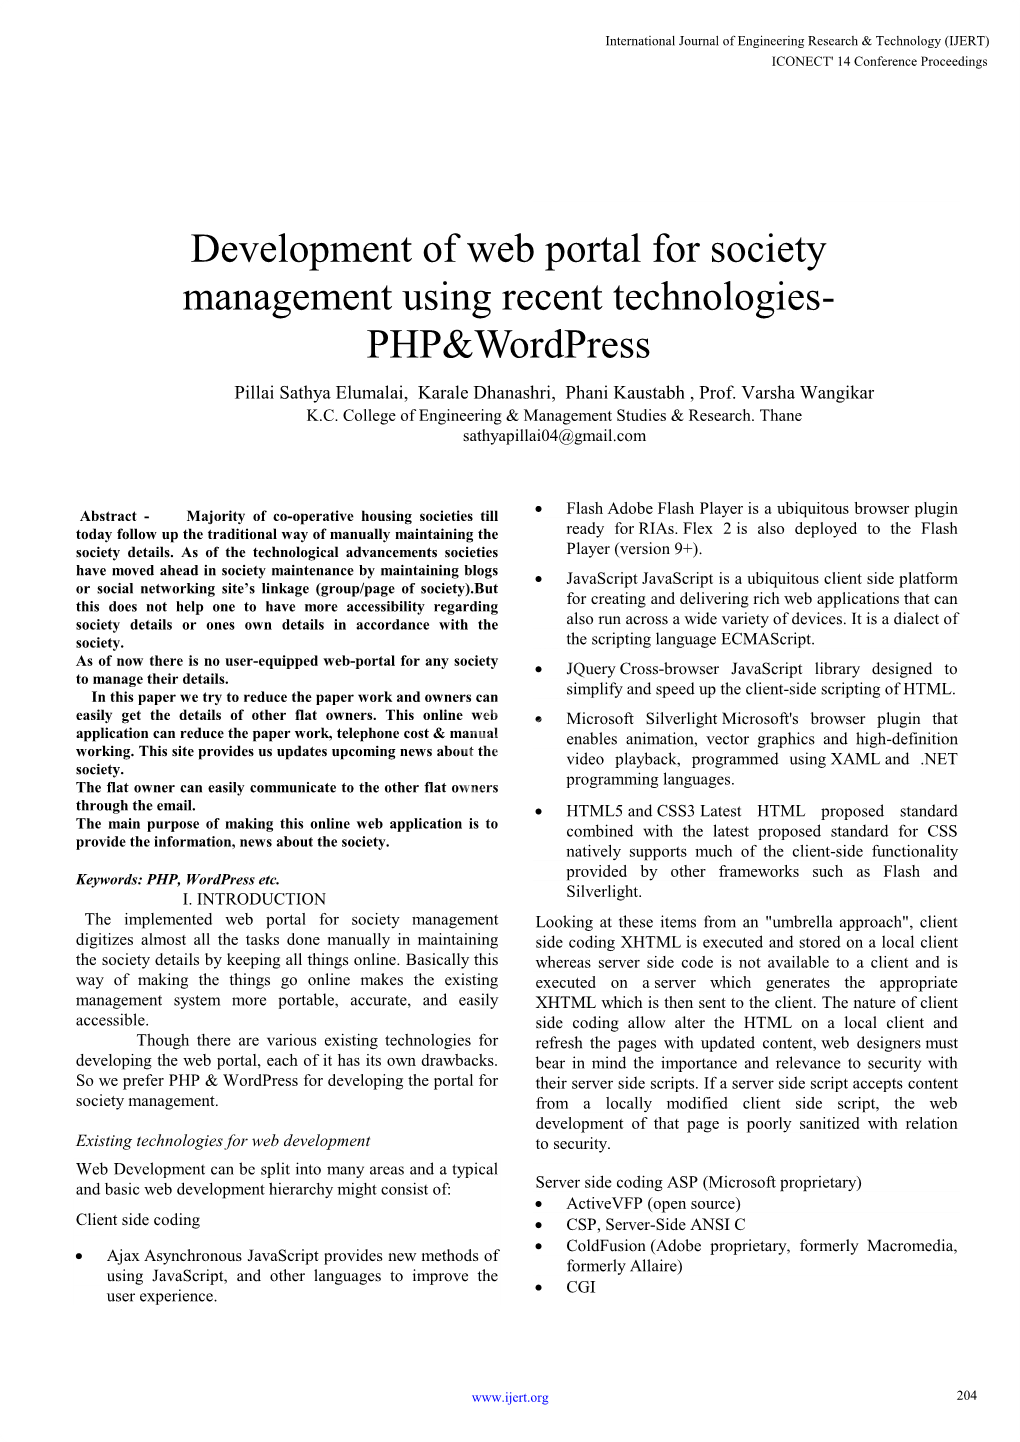 Development of Web Portal for Society Management Using Recent Technologies-PHP&Wordpress